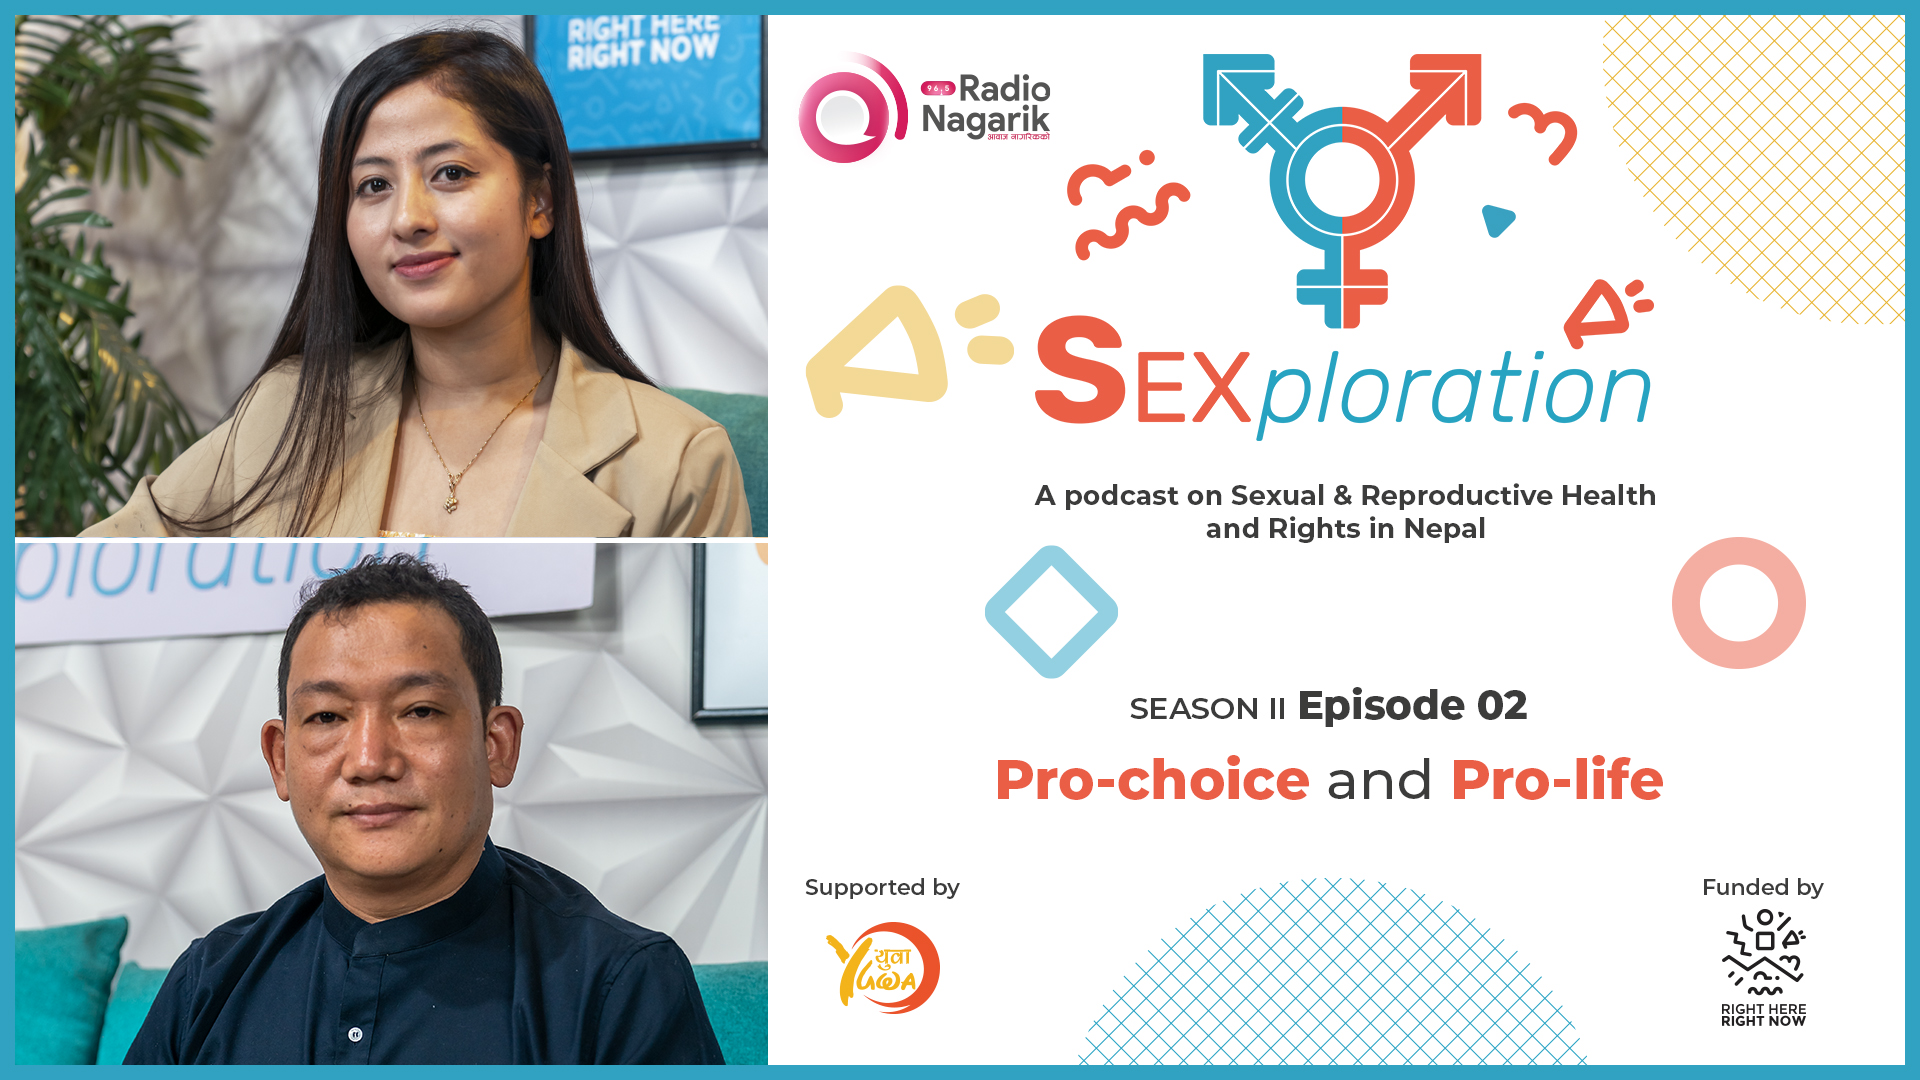 Sexploration Season 2 Episode 2: Pro-Choice and Pro-Life